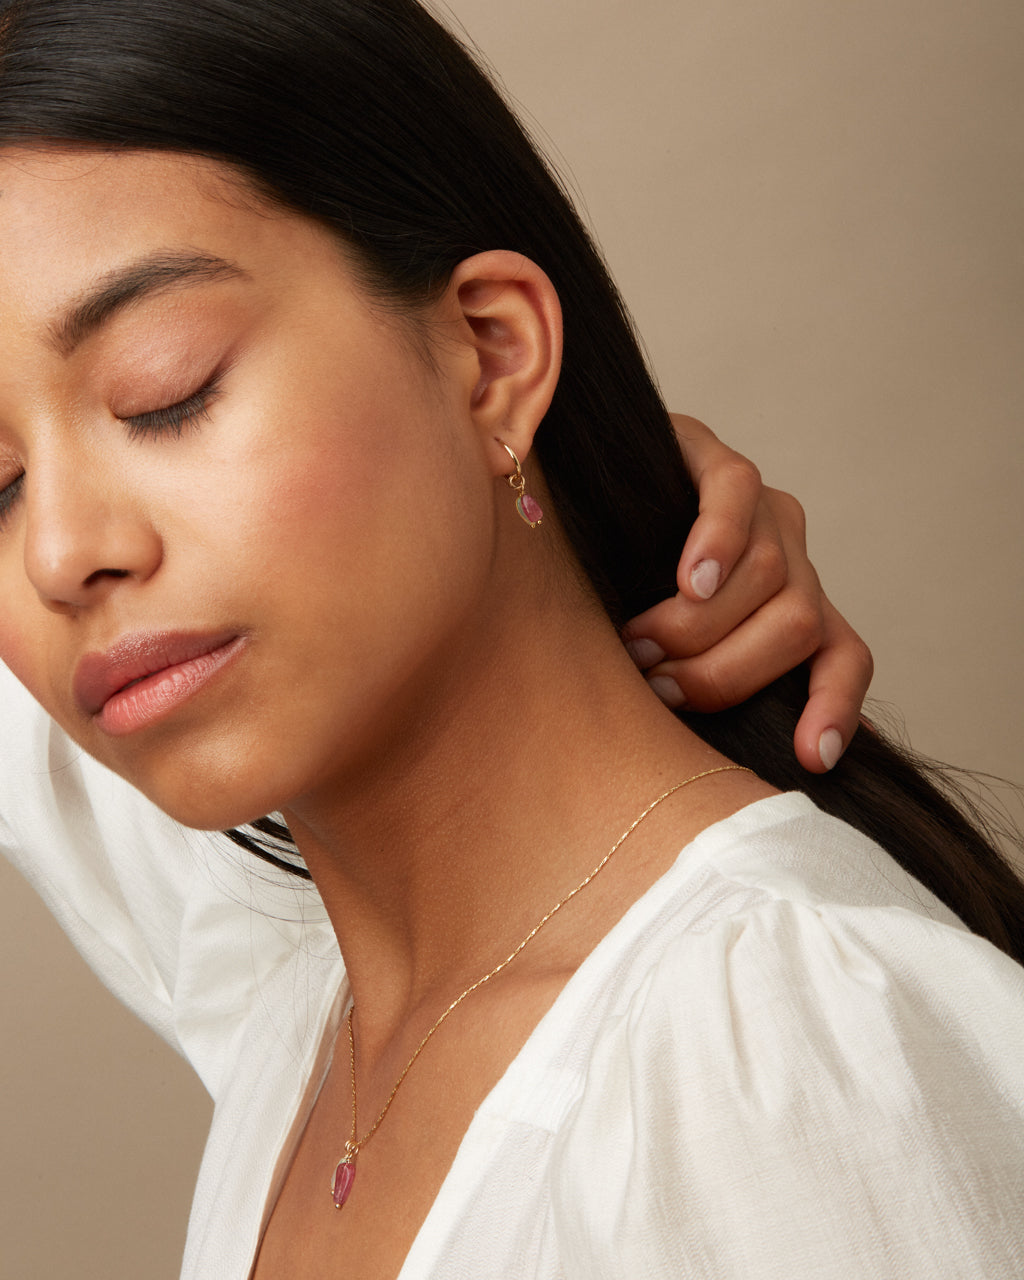 14K Gold Filled Opal & Tourmaline Earrings | Inspiration Her Jewellery